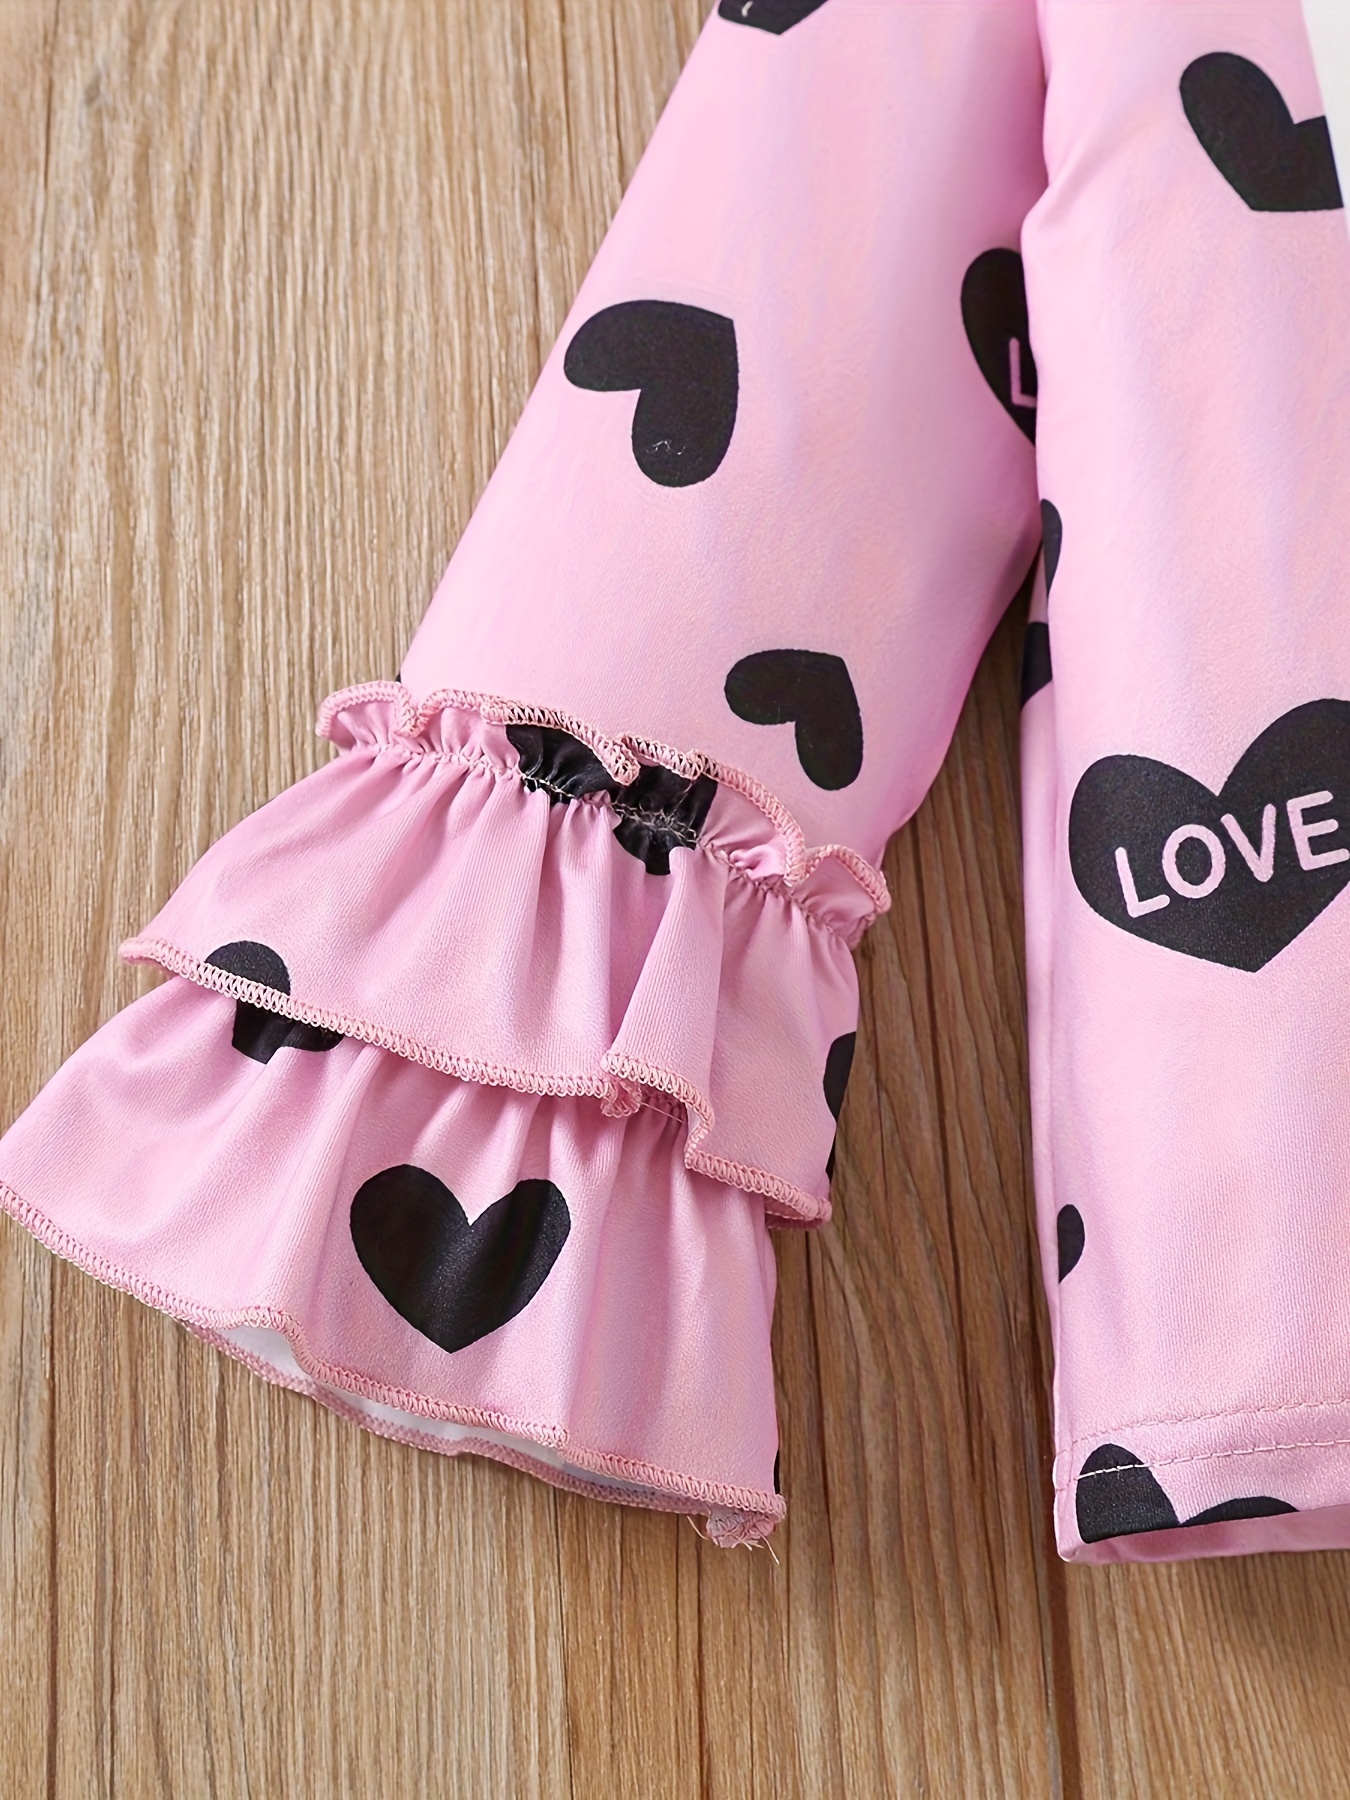 2-piece Dress and Leggings Set - Light pink/hearts - Kids